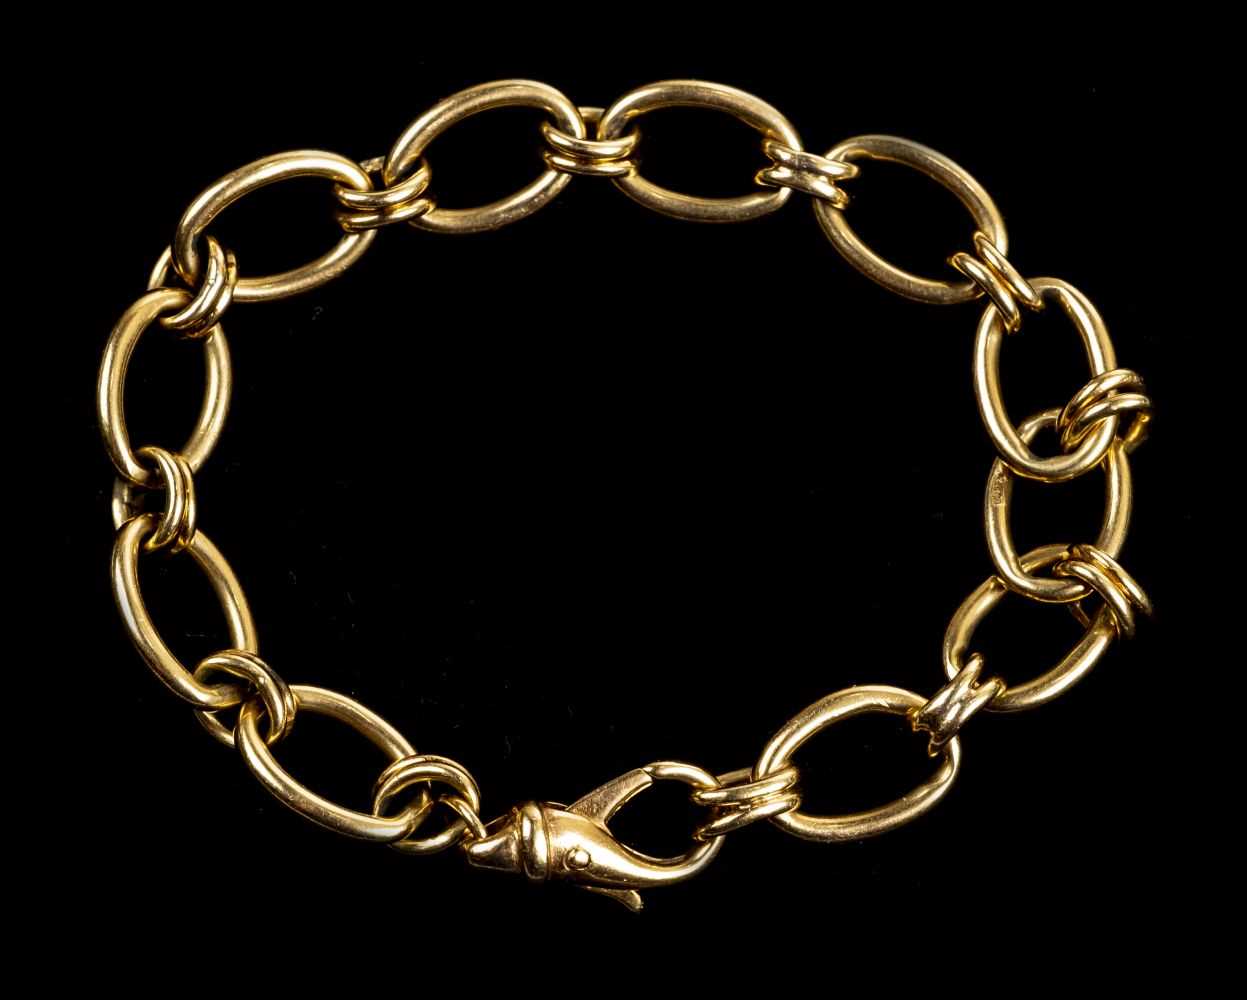 Lot 3 - Bracelet. A 9ct gold open link bracelet